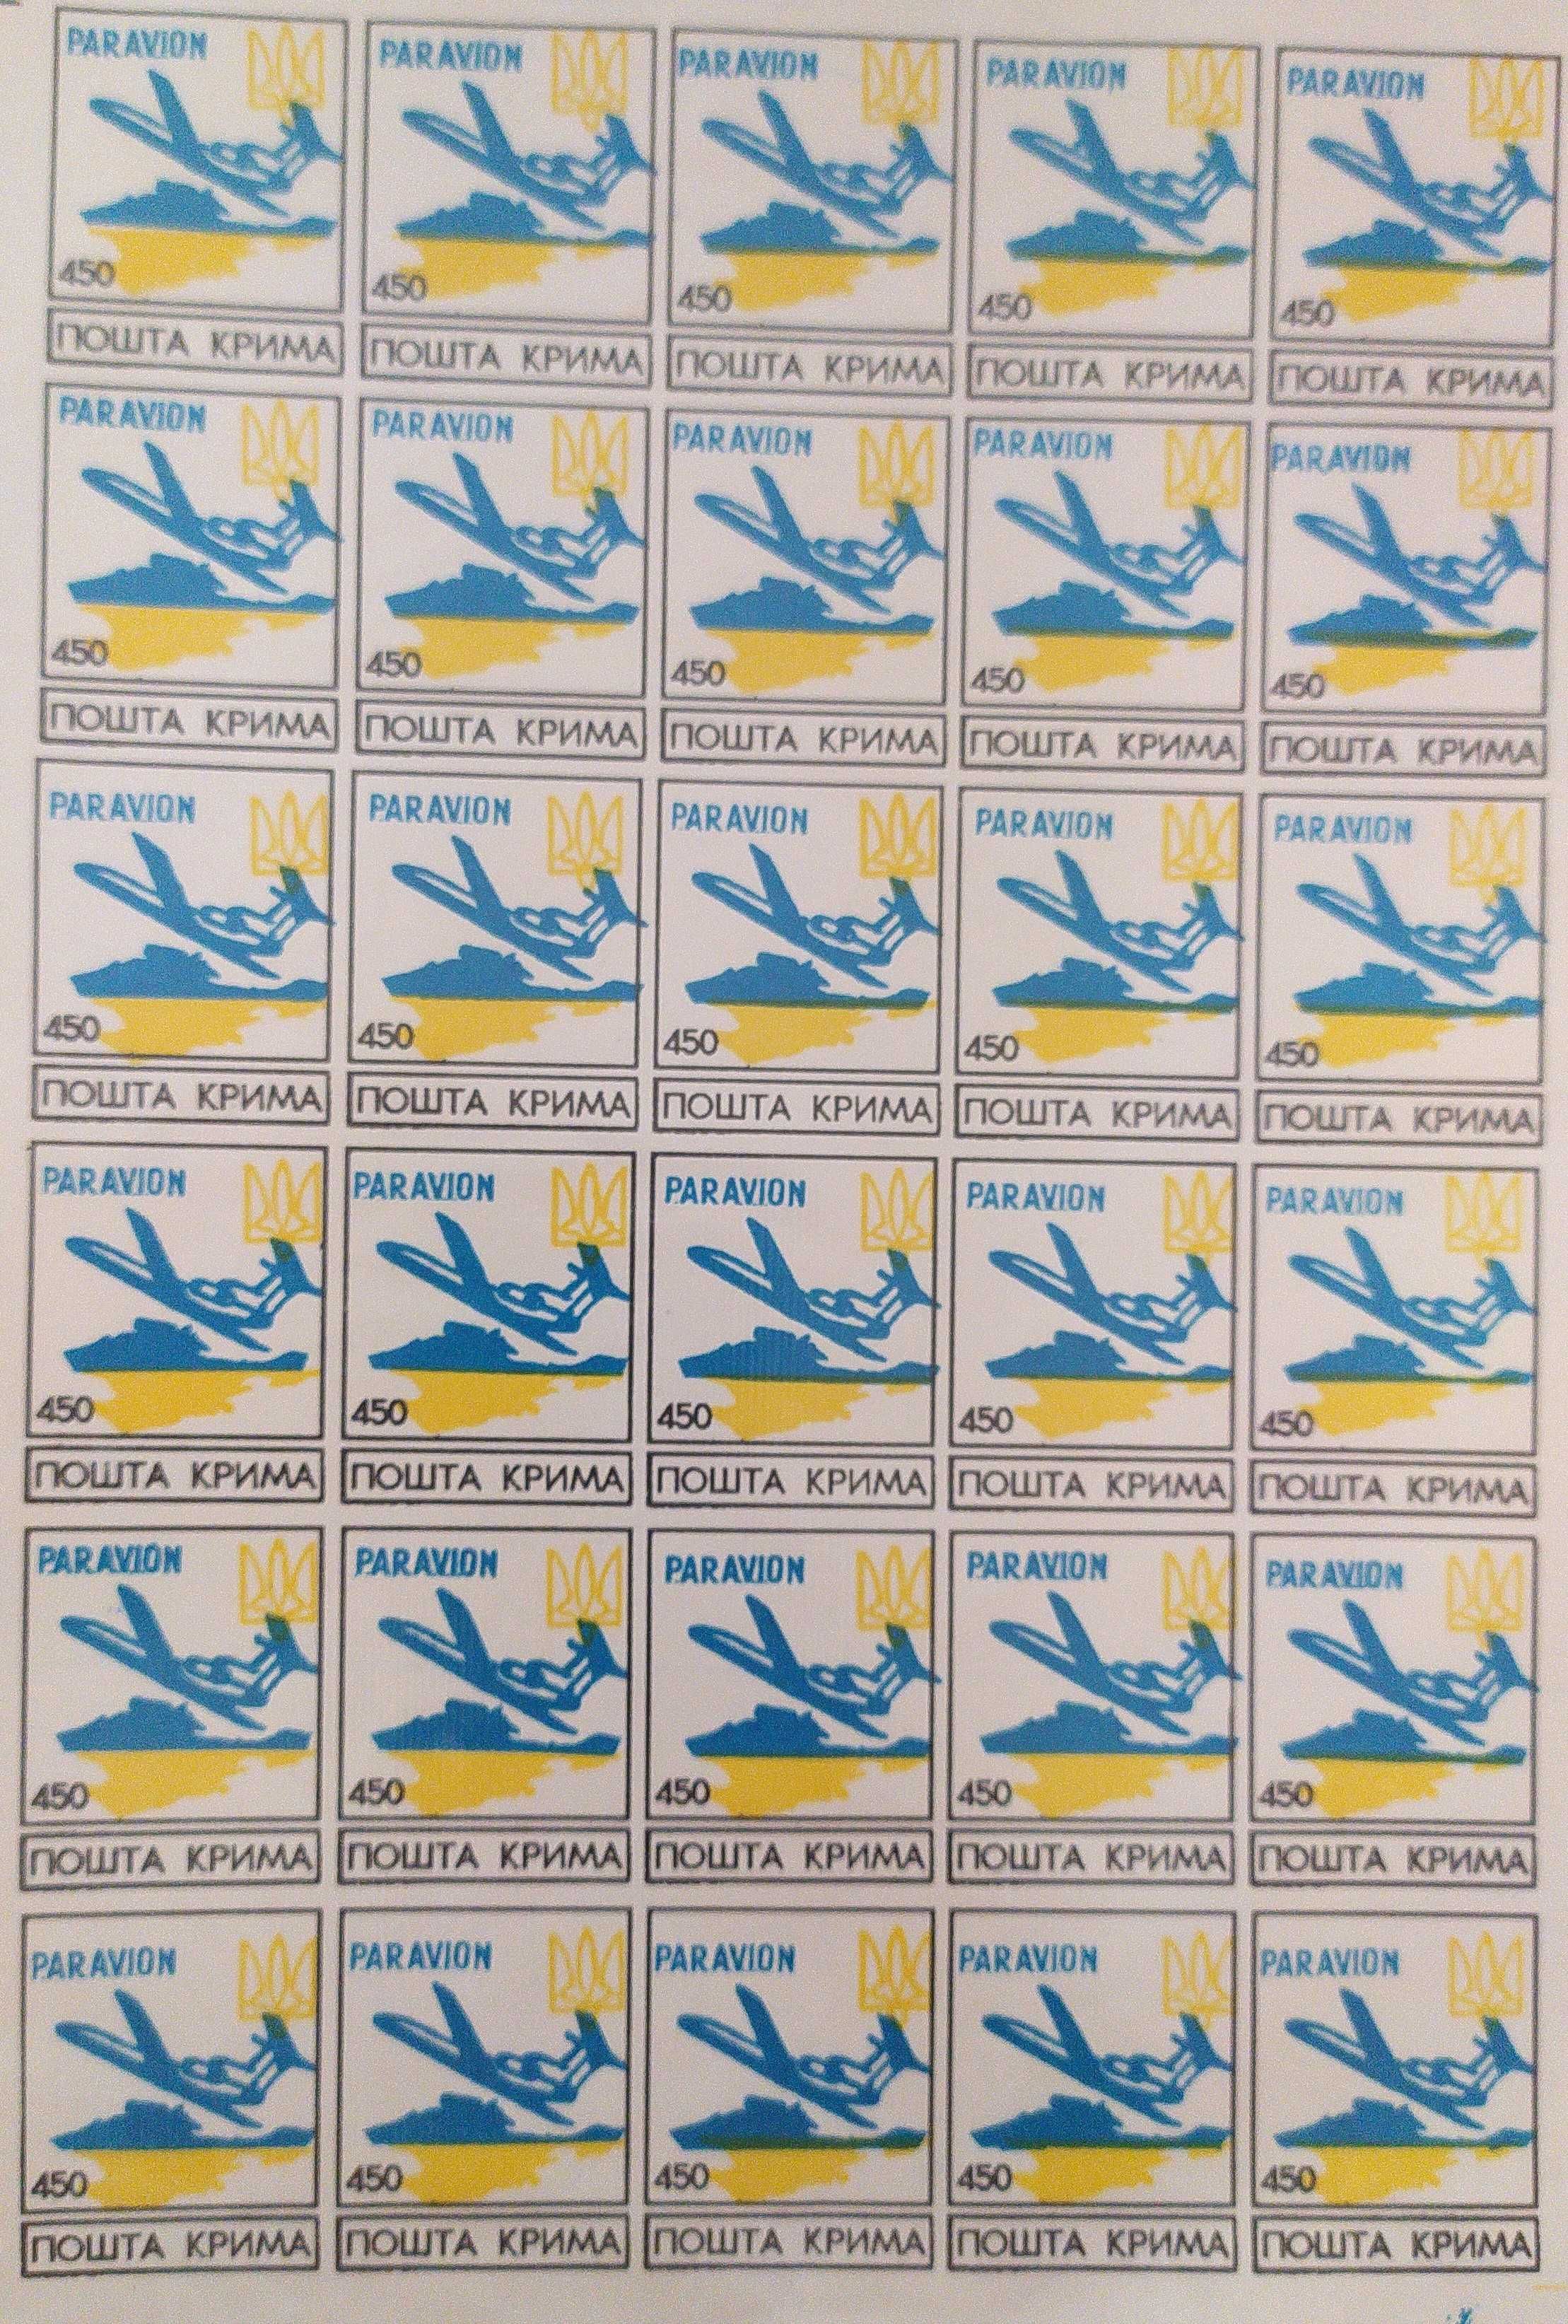 марка  paravion 450 пошта крима 1993 г.  Лист 30 шт.